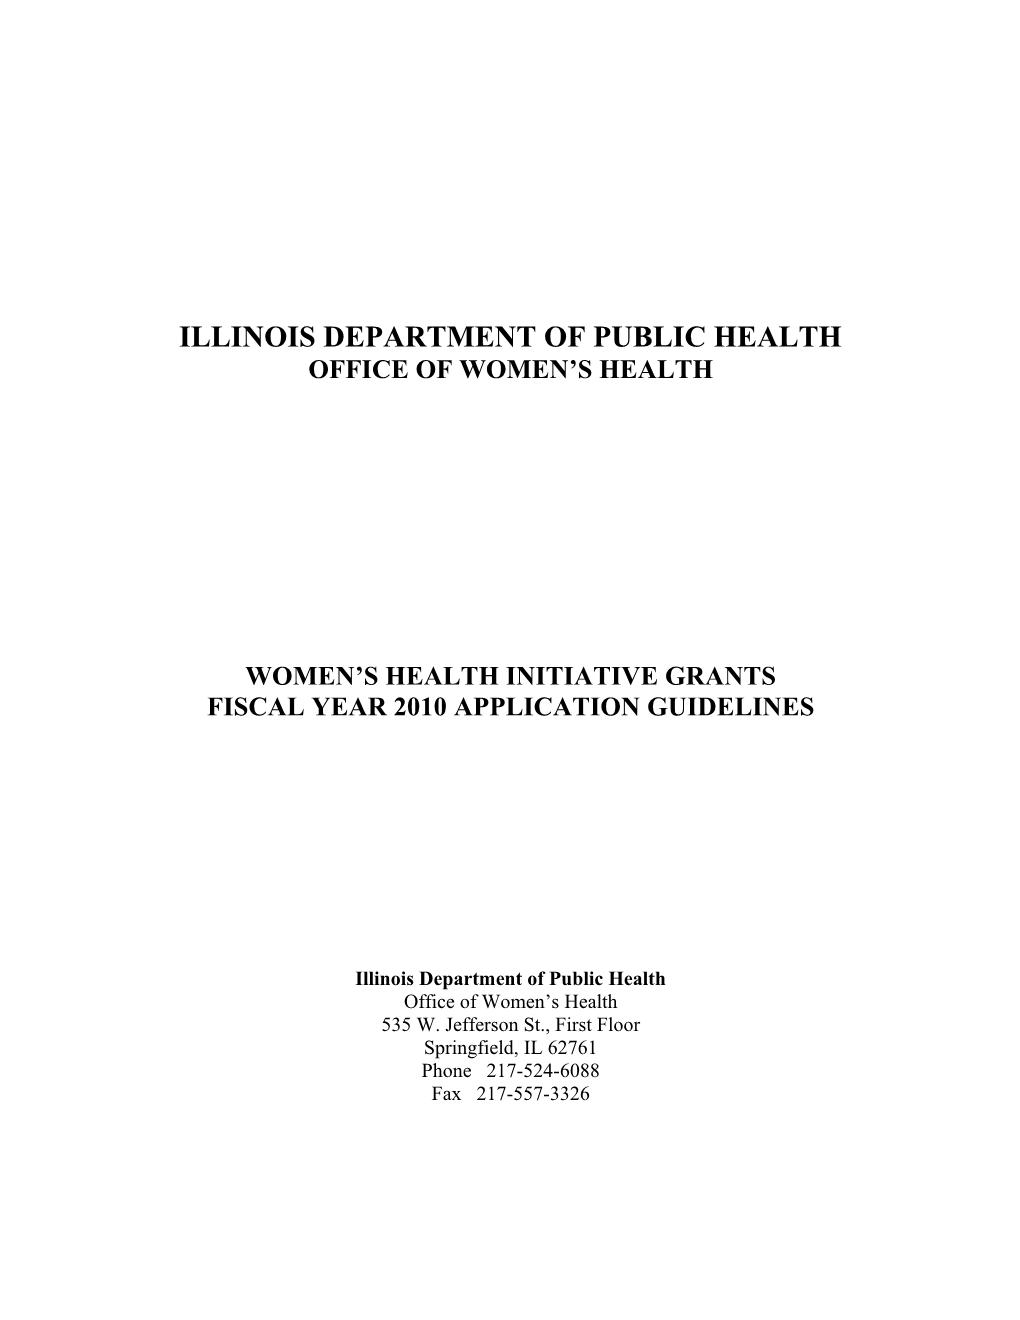 Illinois Department of Public Health s2